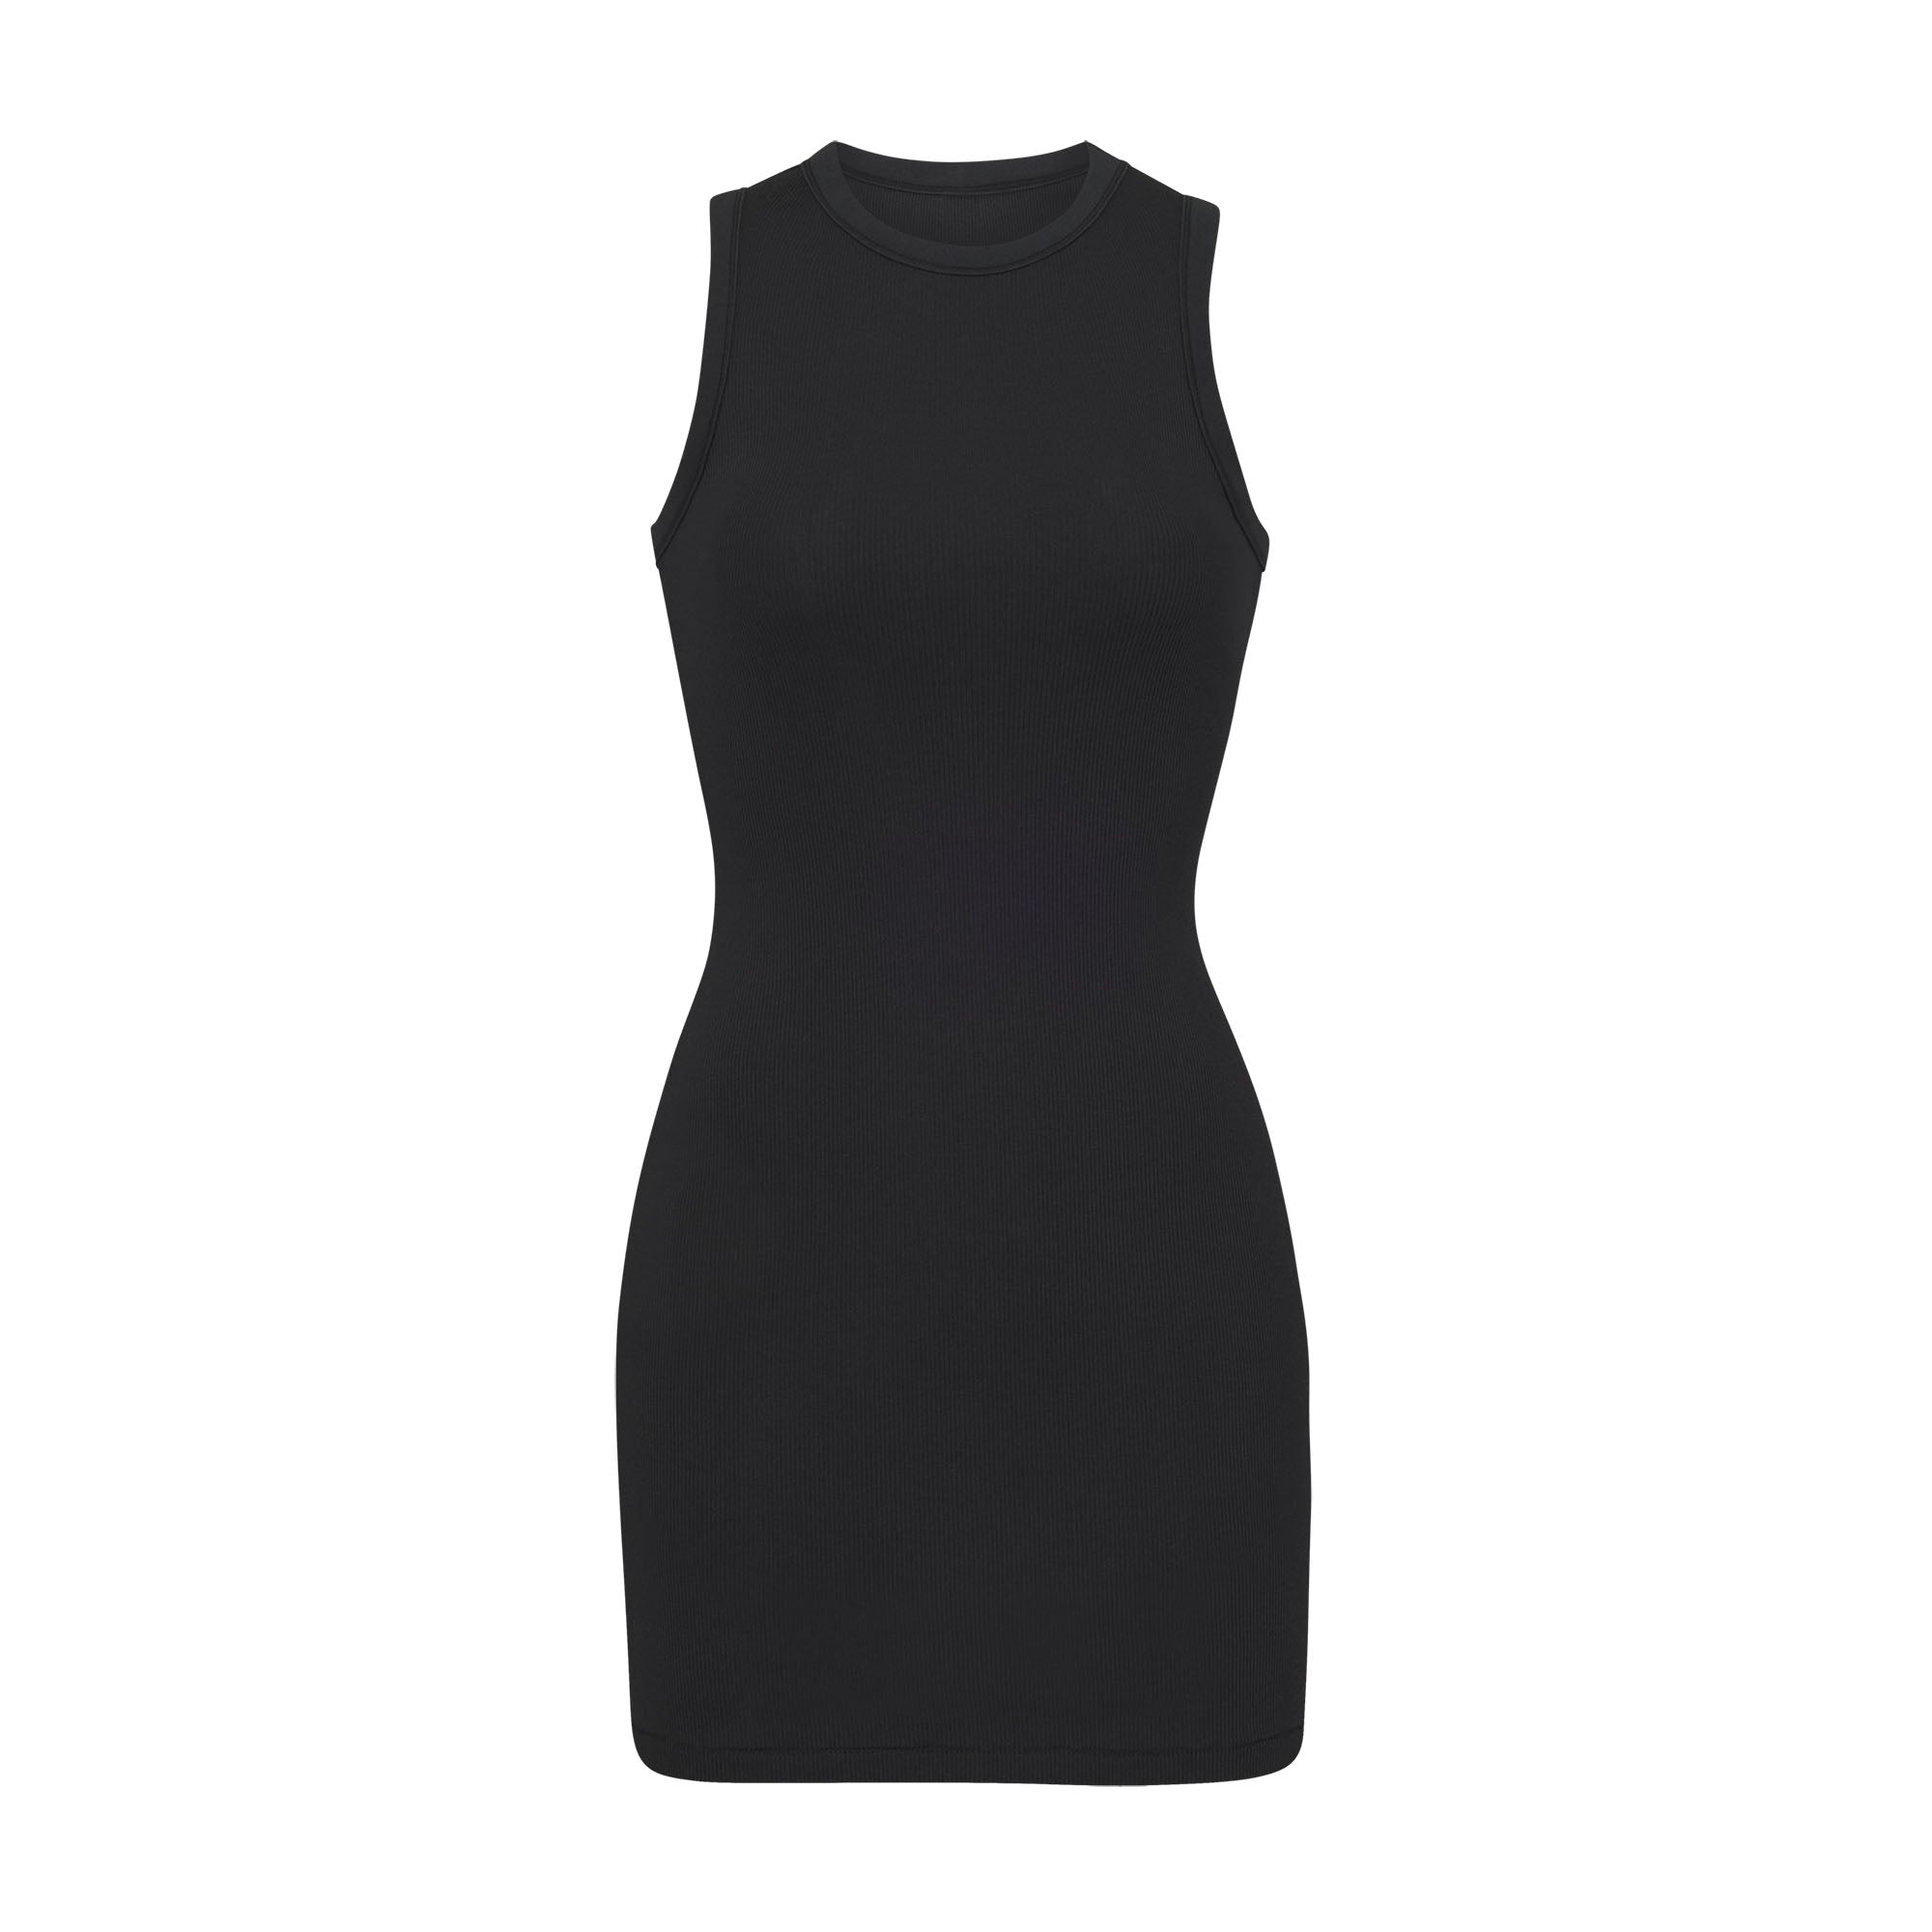 SKIMS Ribbed Stretch-cotton Jersey Mini Dress - Light Heather Grey